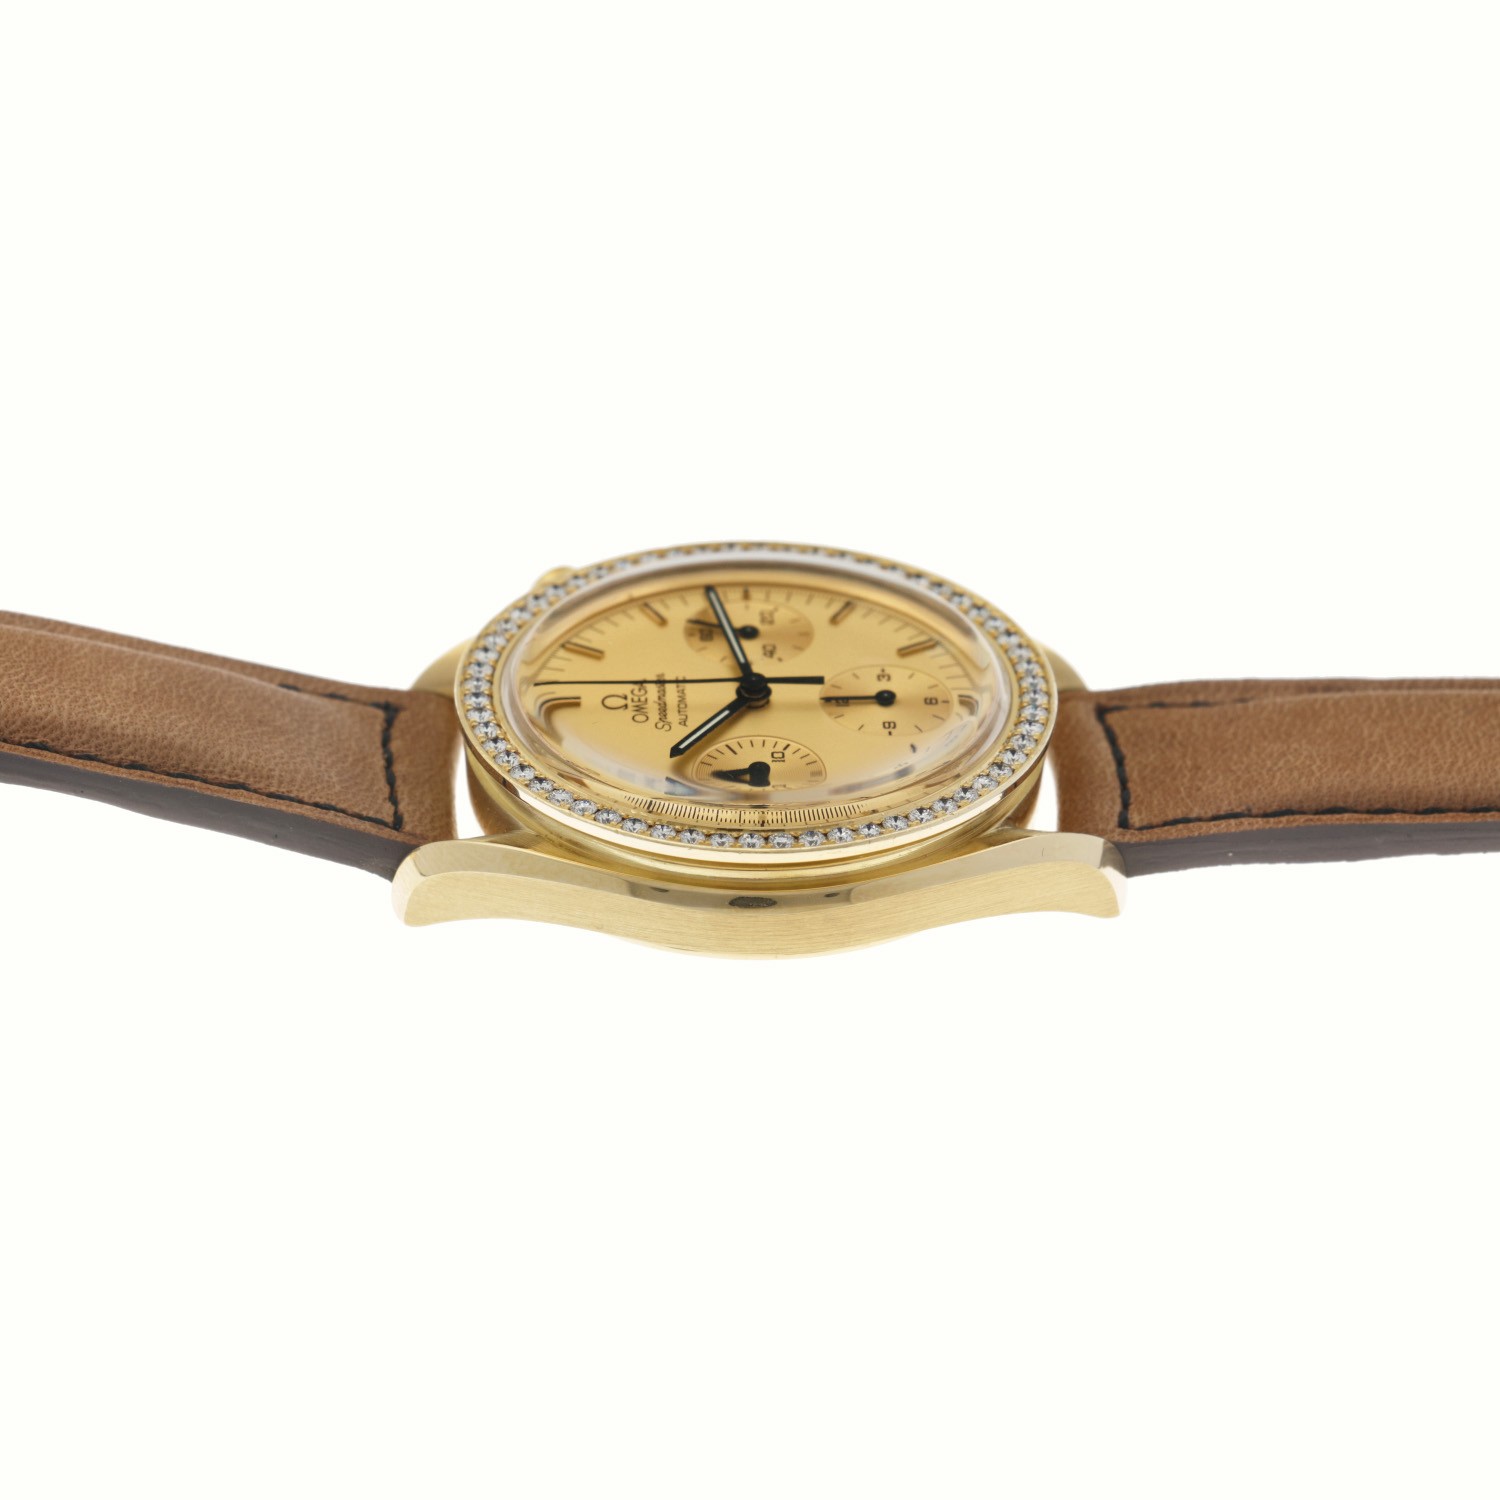 No Reserve - Omega Speedmaster 275.0032 - Men's watch. - Image 4 of 6